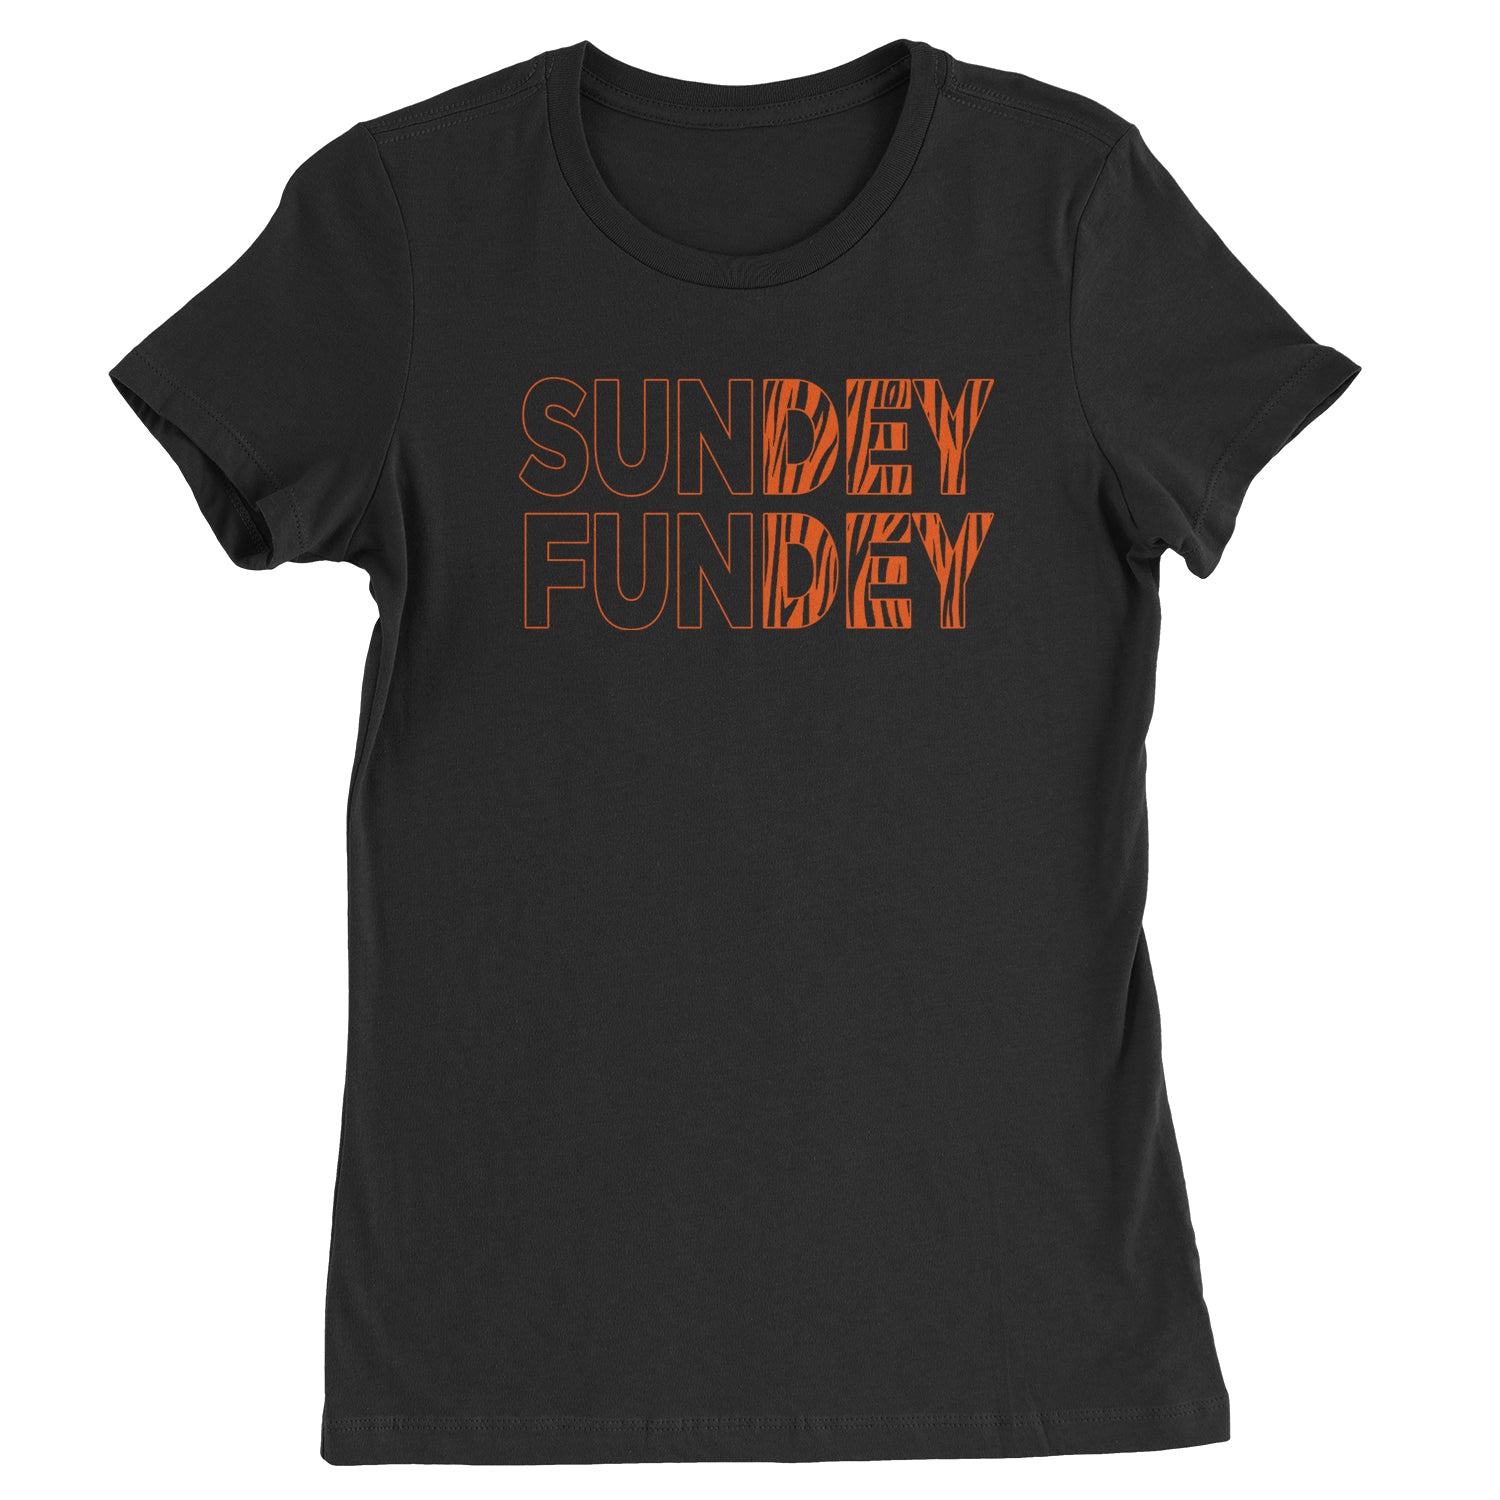 SunDEY FunDEY Sunday Funday Womens T-shirt ball, burrow, dey, foot, football, joe, ohio, sports, who by Expression Tees